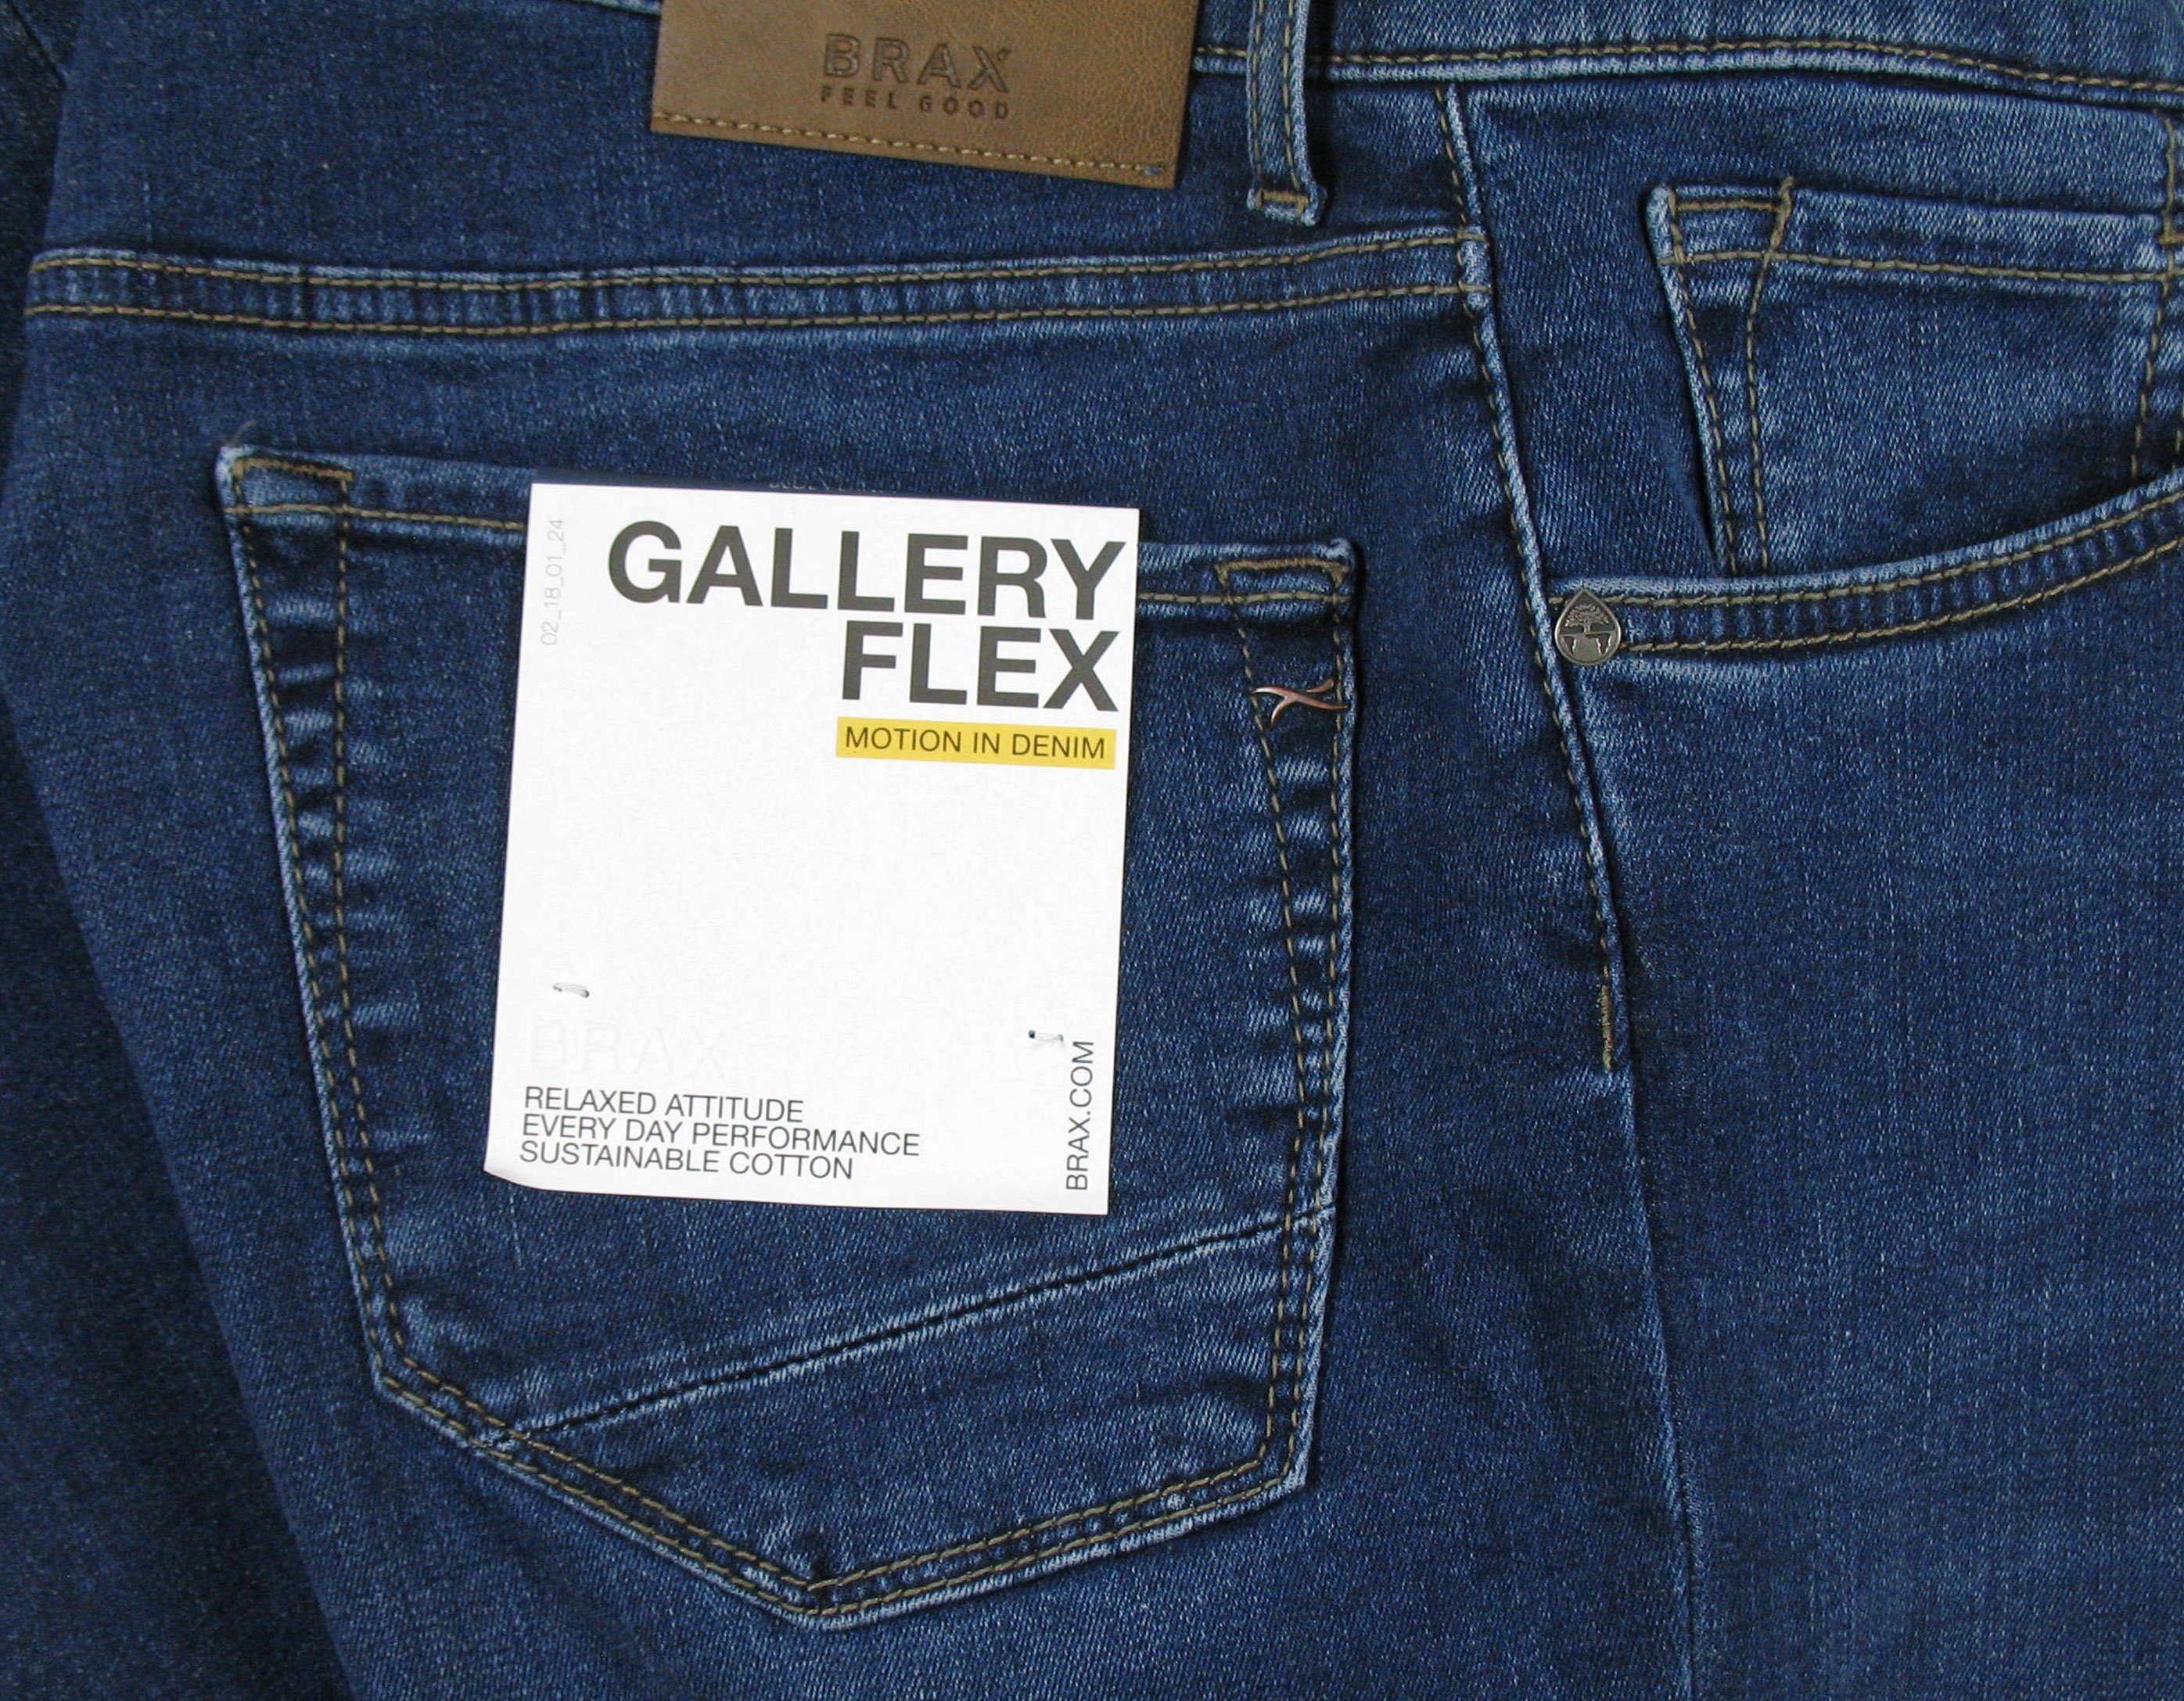 Brax 5-Pocket-Jeans Chuck Gallery Flex Blue Denim Used Ocean